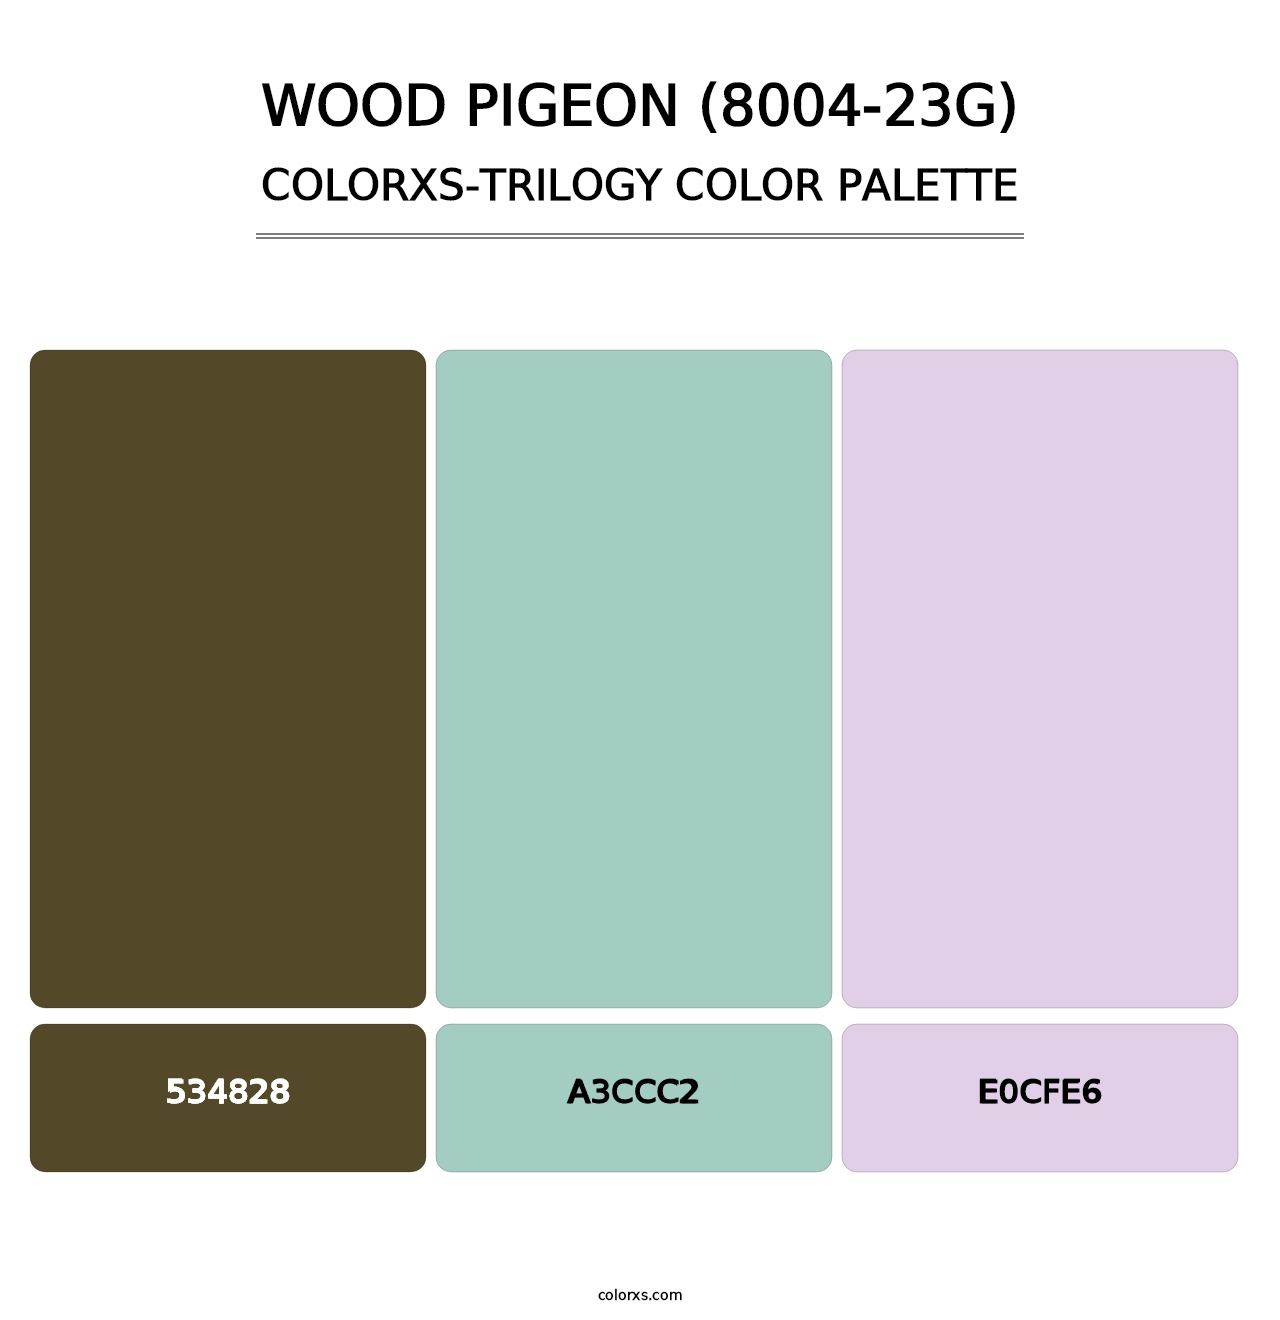 Wood Pigeon (8004-23G) - Colorxs Trilogy Palette